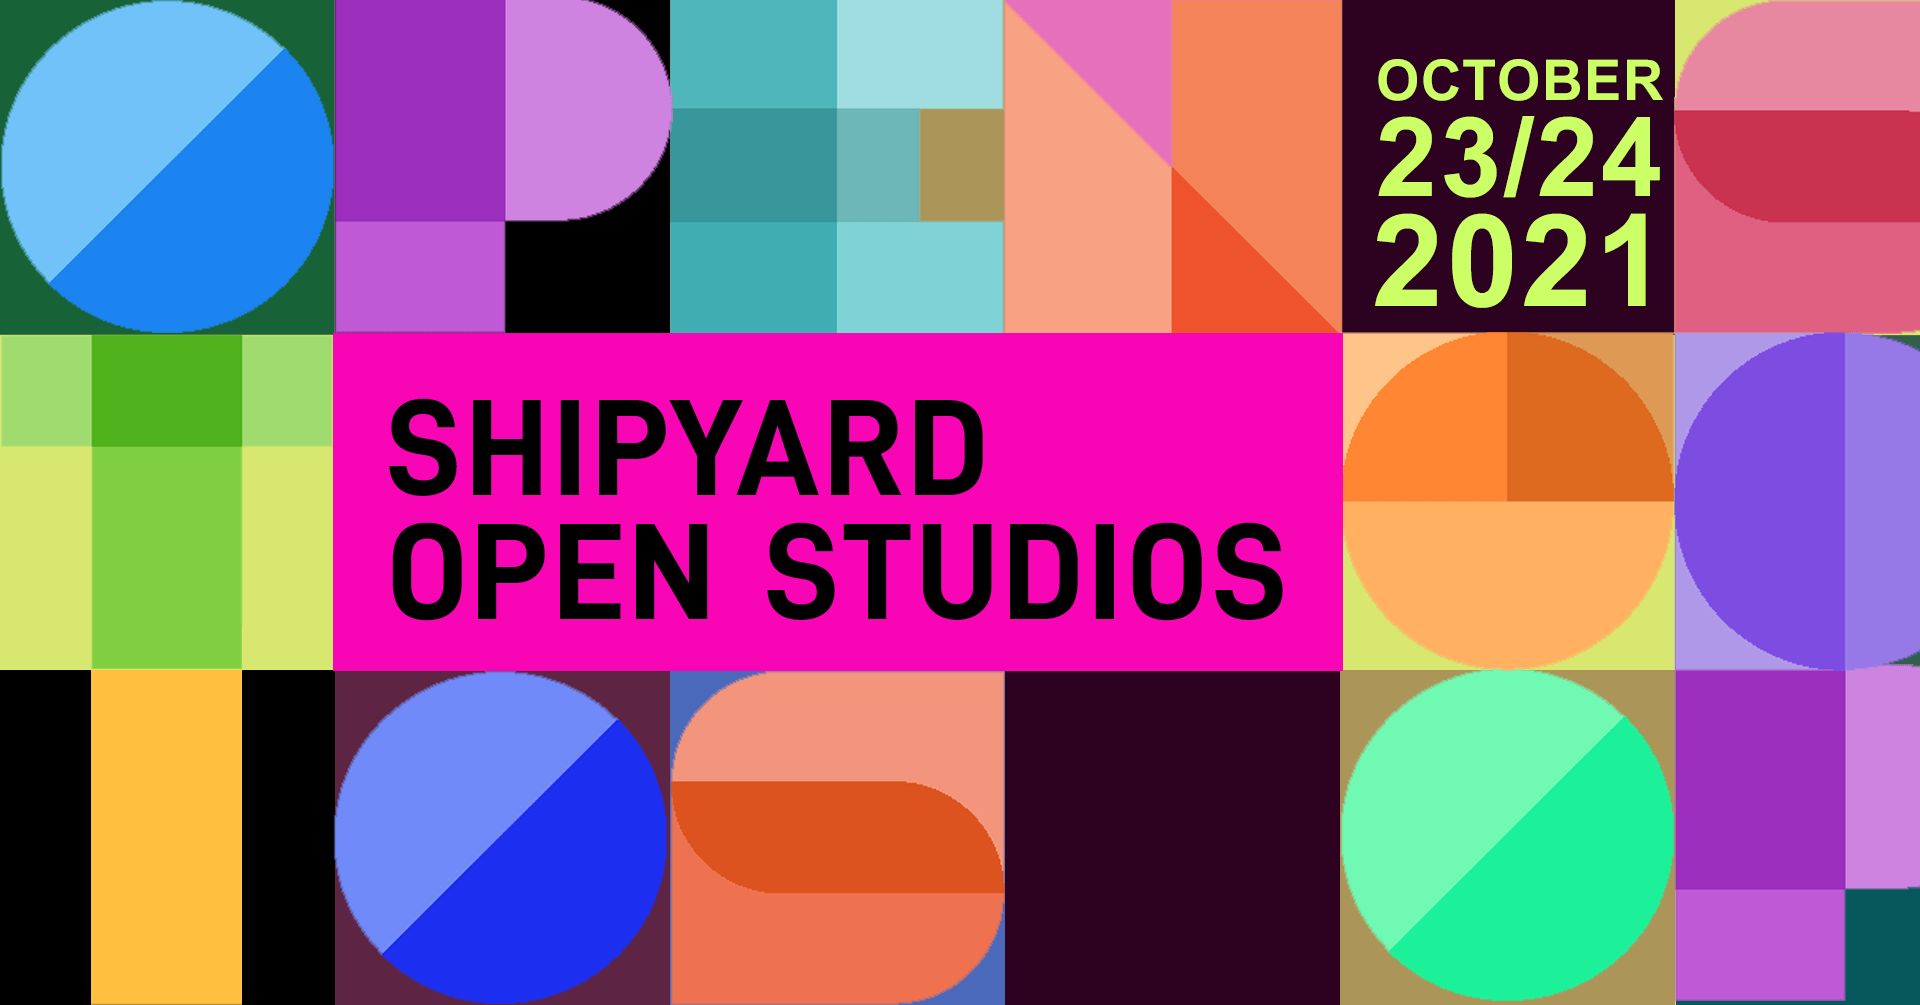 Shipyard Open Studios 2021, San Francisco, California, United States